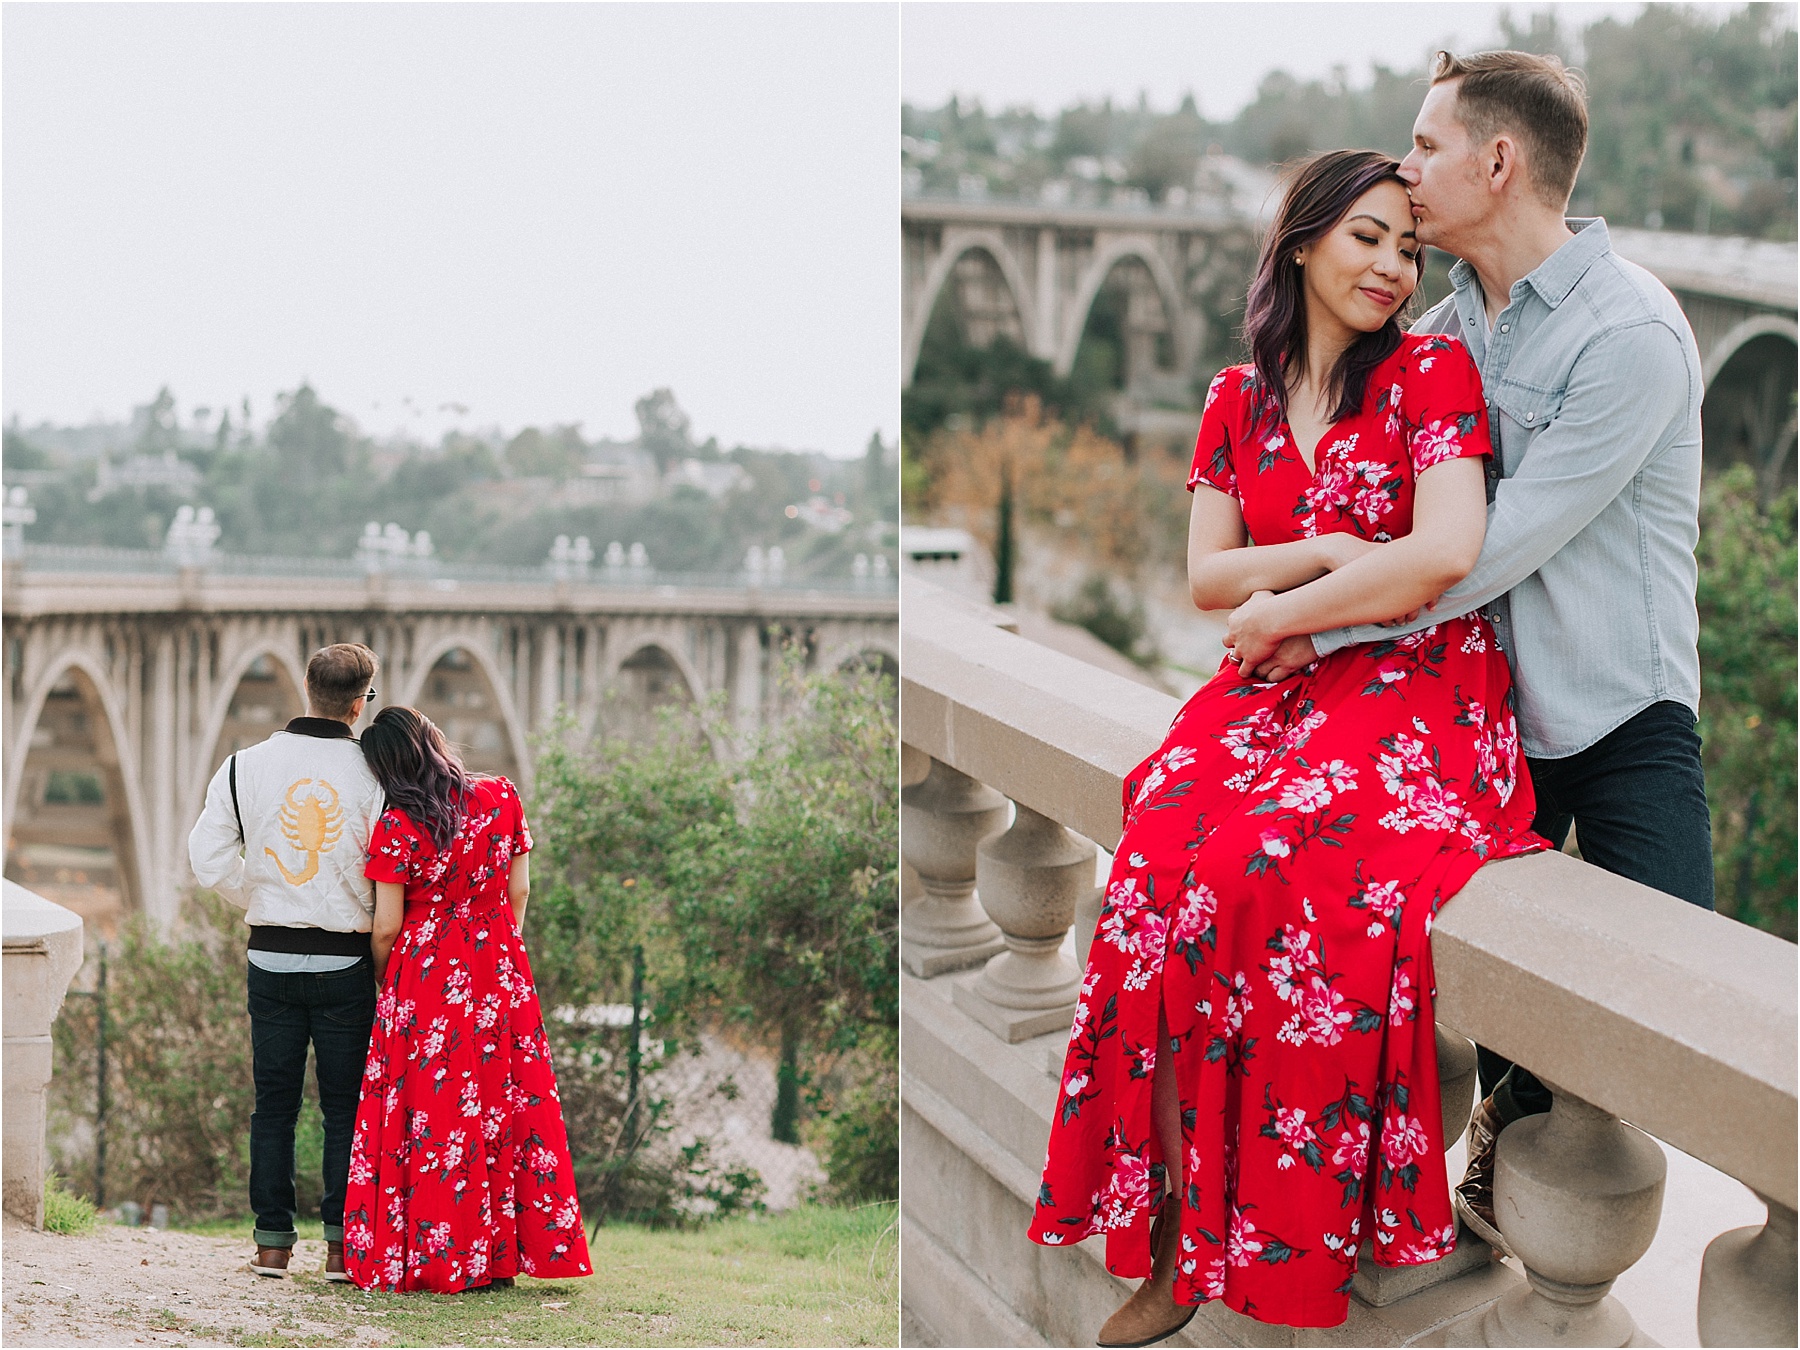 Candid Engagement Photography at the Old Town Pasadena Bridge